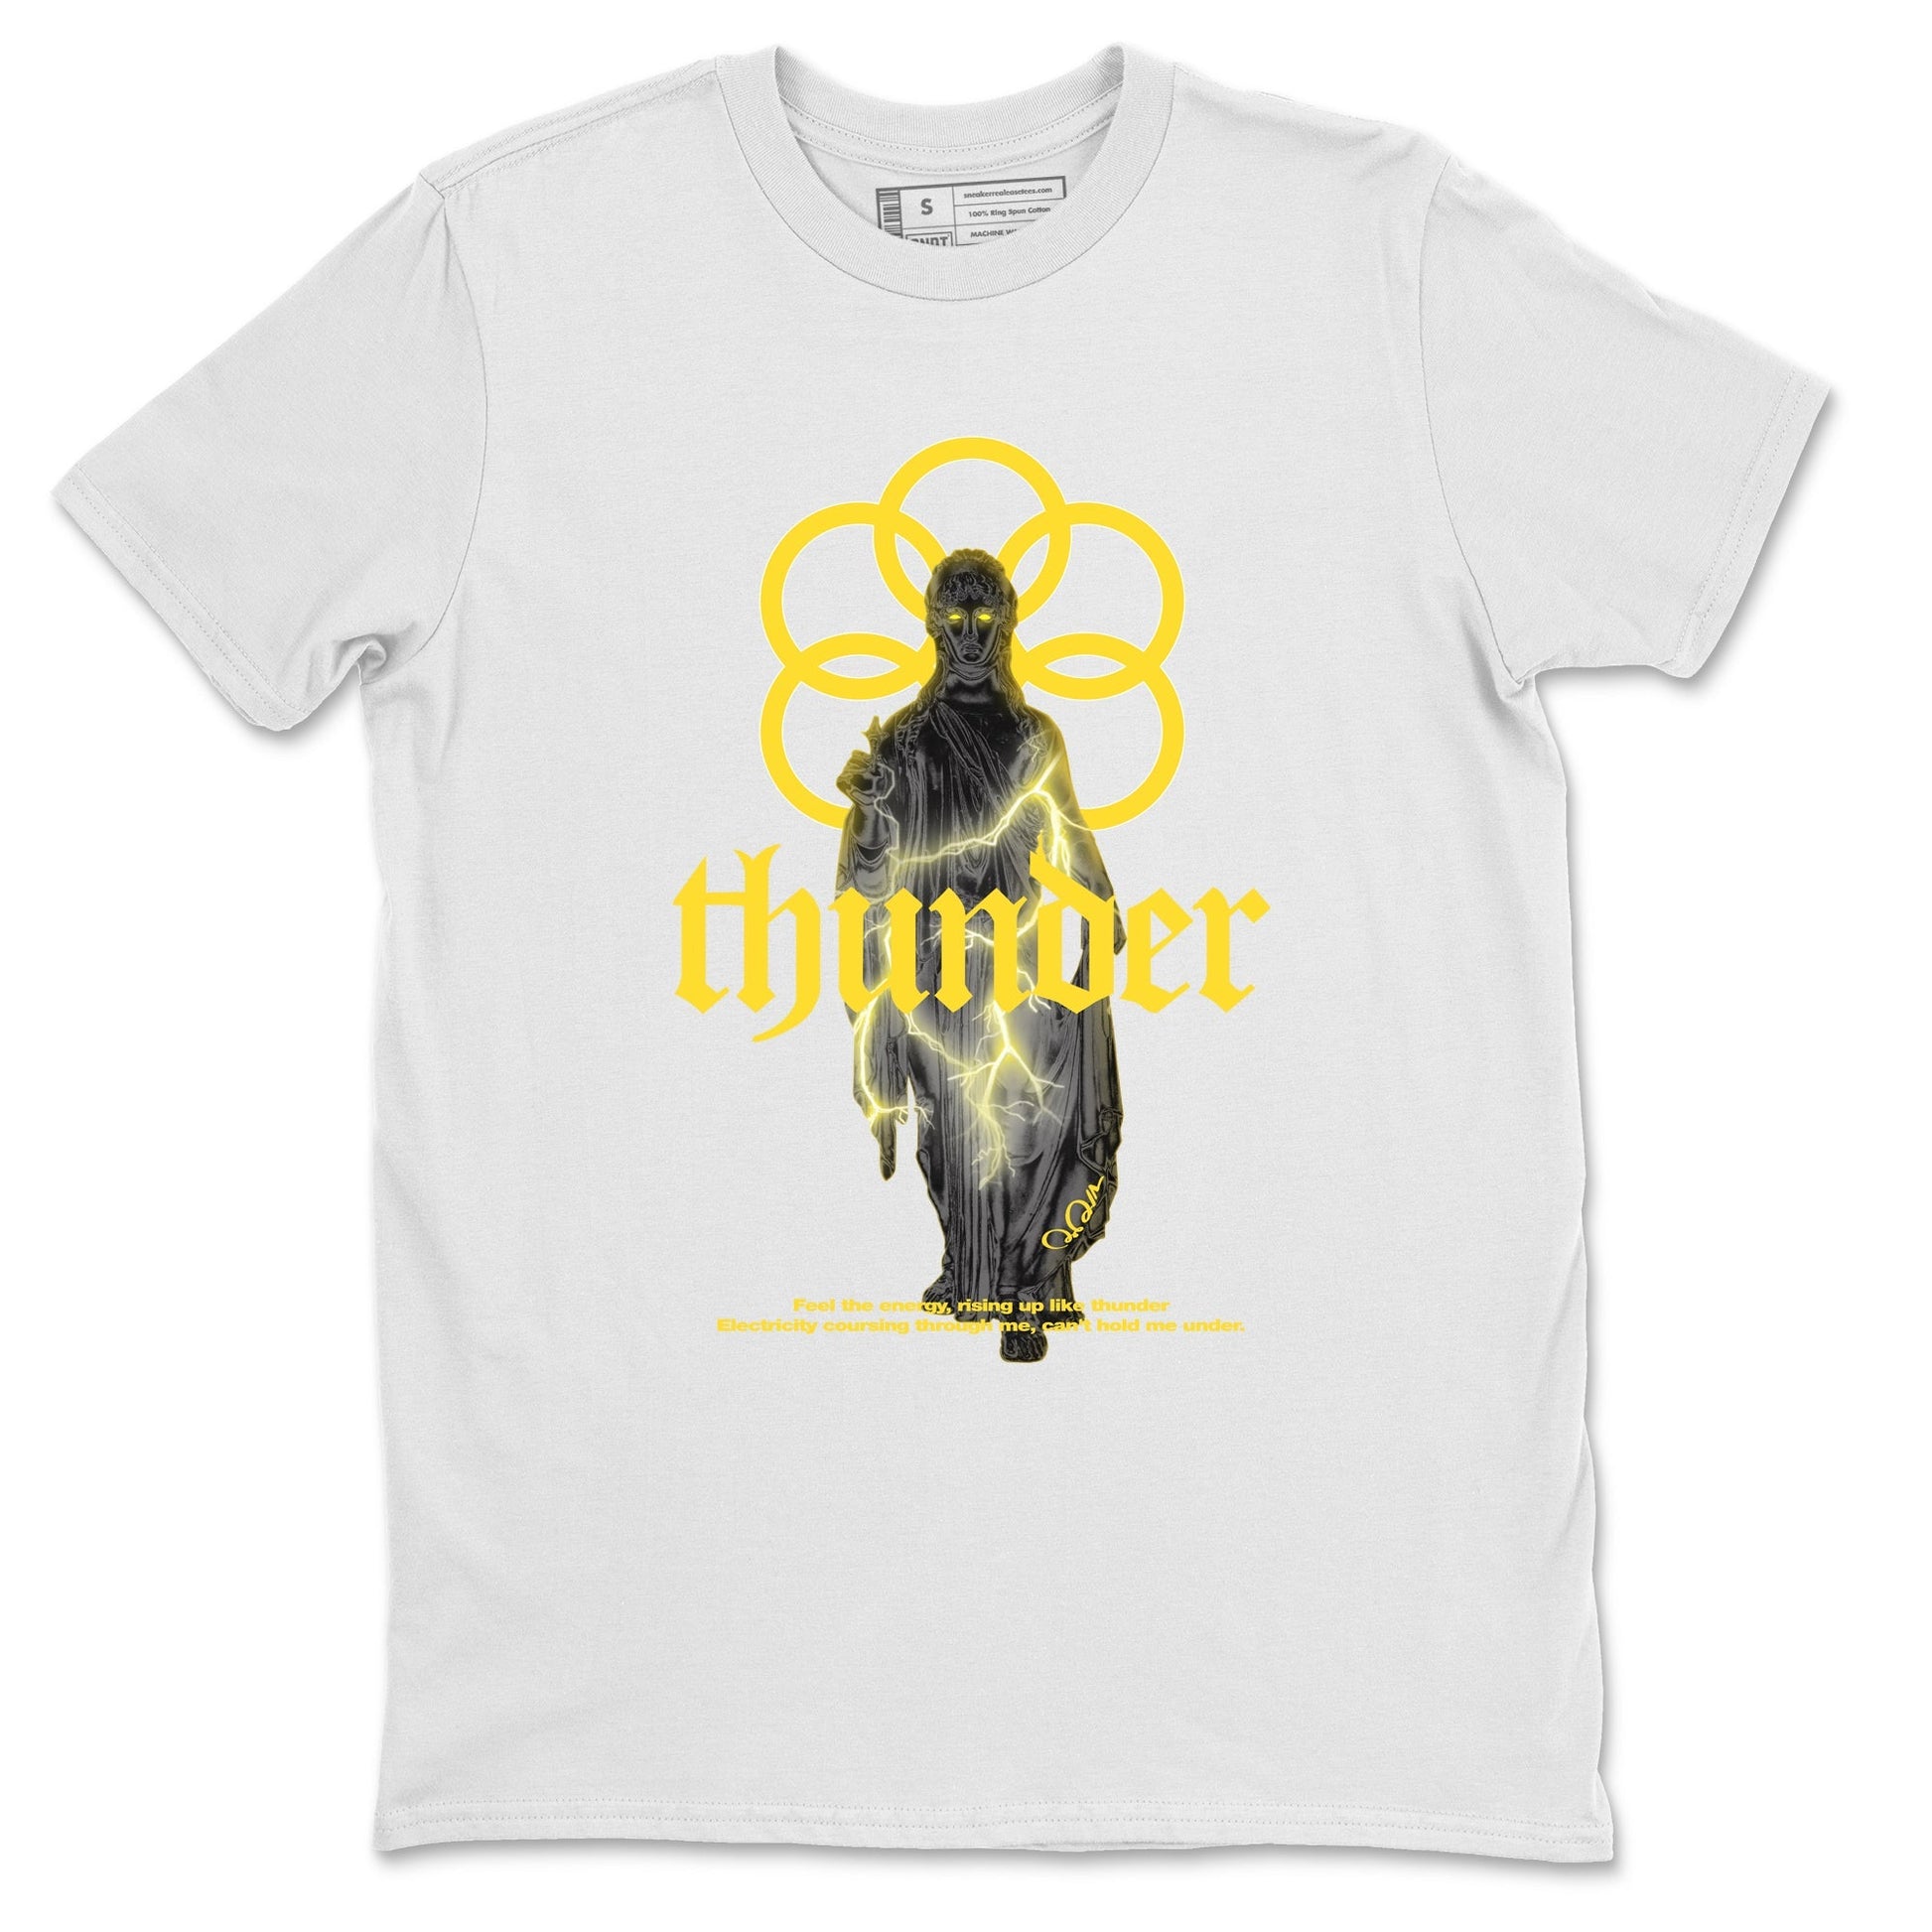 Air Jordan 4 Thunder Sneaker Match Tees Staute Woman Shirts Yellow AJ4 Thunder Drip Gear Zone Unisex Shirts White 2